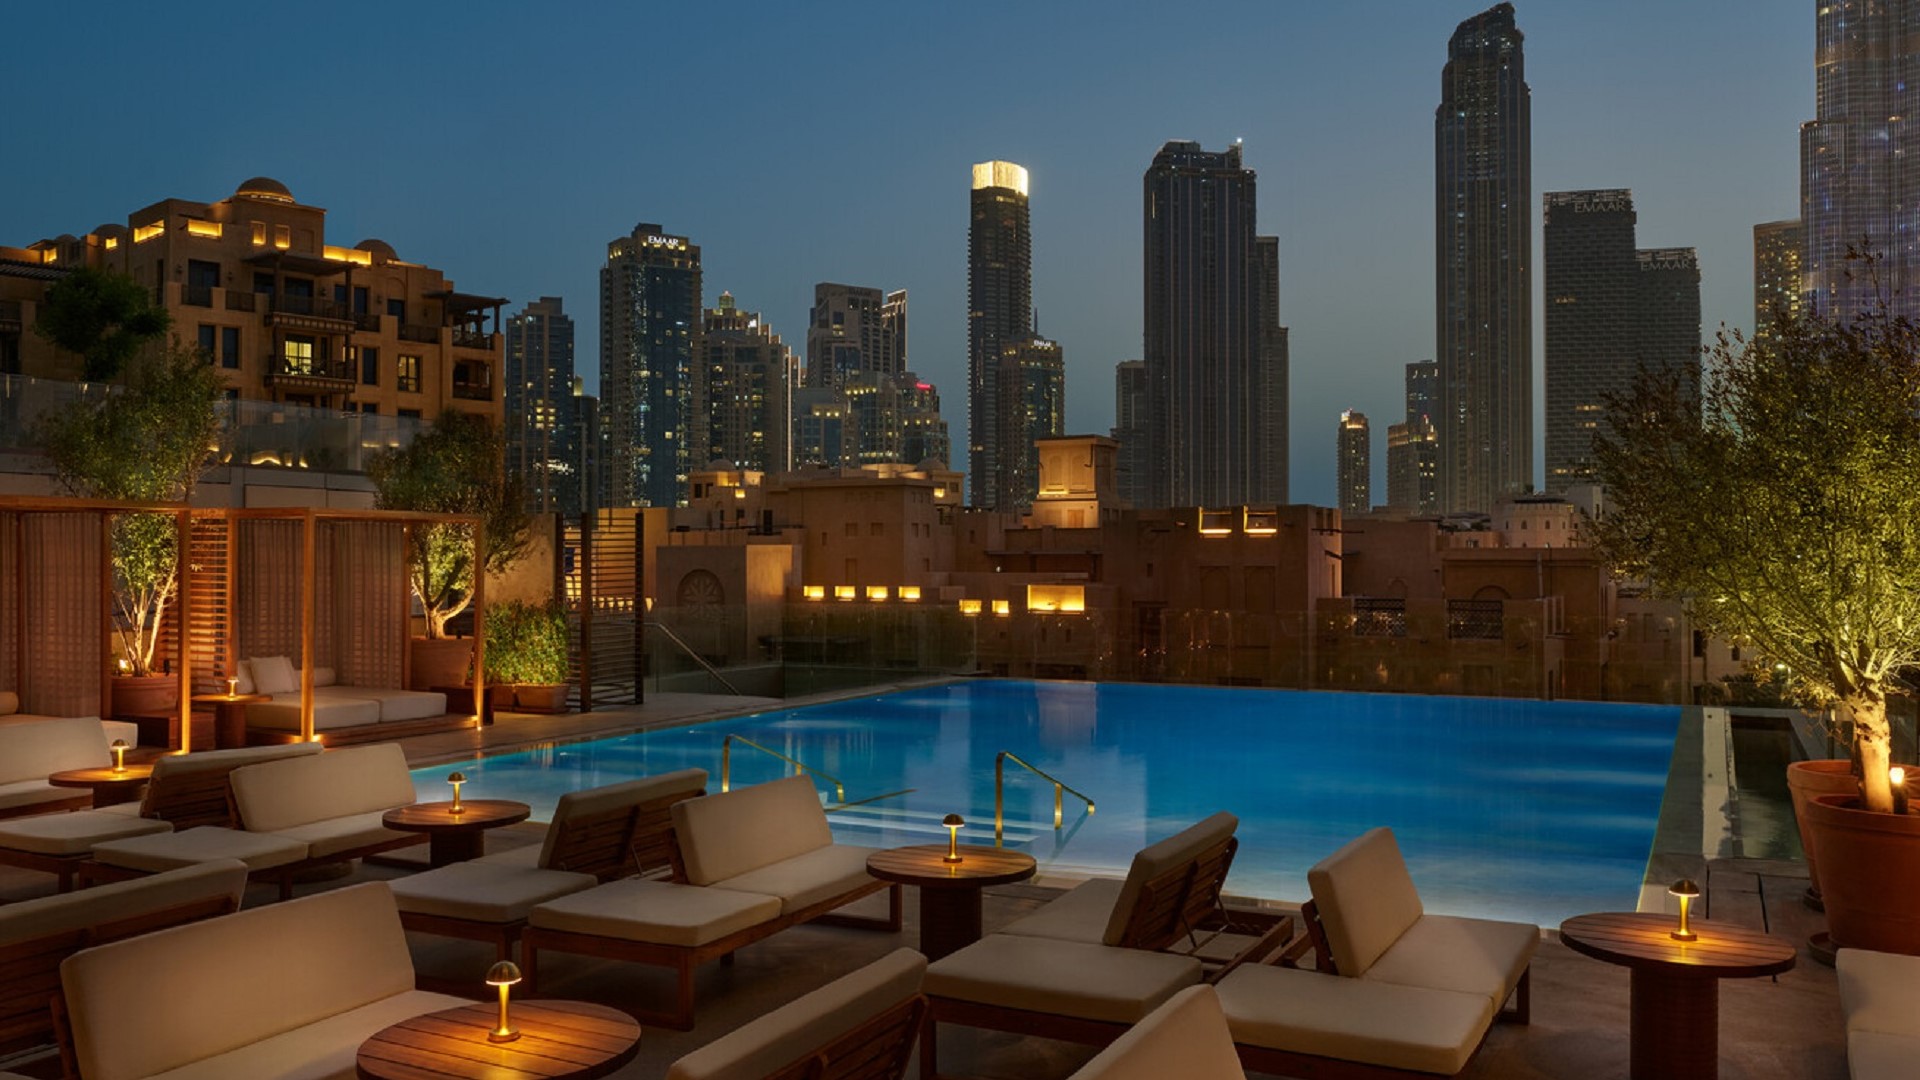 Thia Skylounge Dubai Rooftop bar infinity pool at night